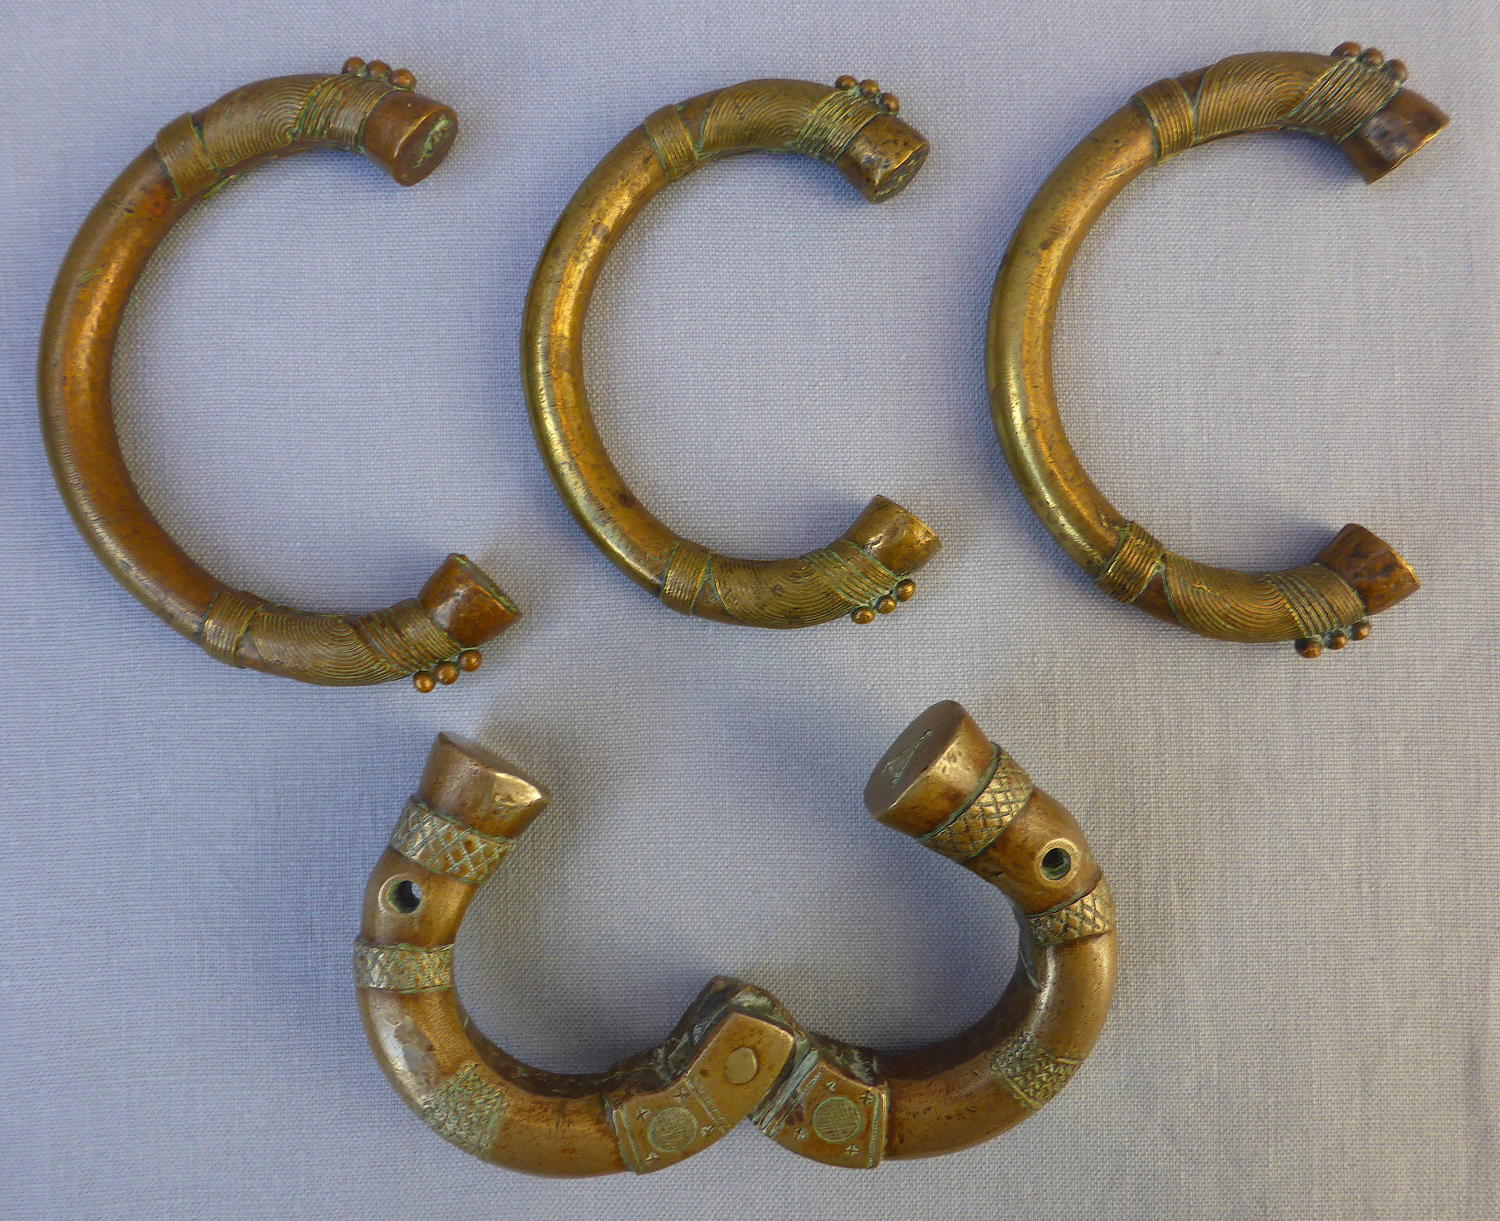 Four 19th century bronze manilla slave currency bracelets